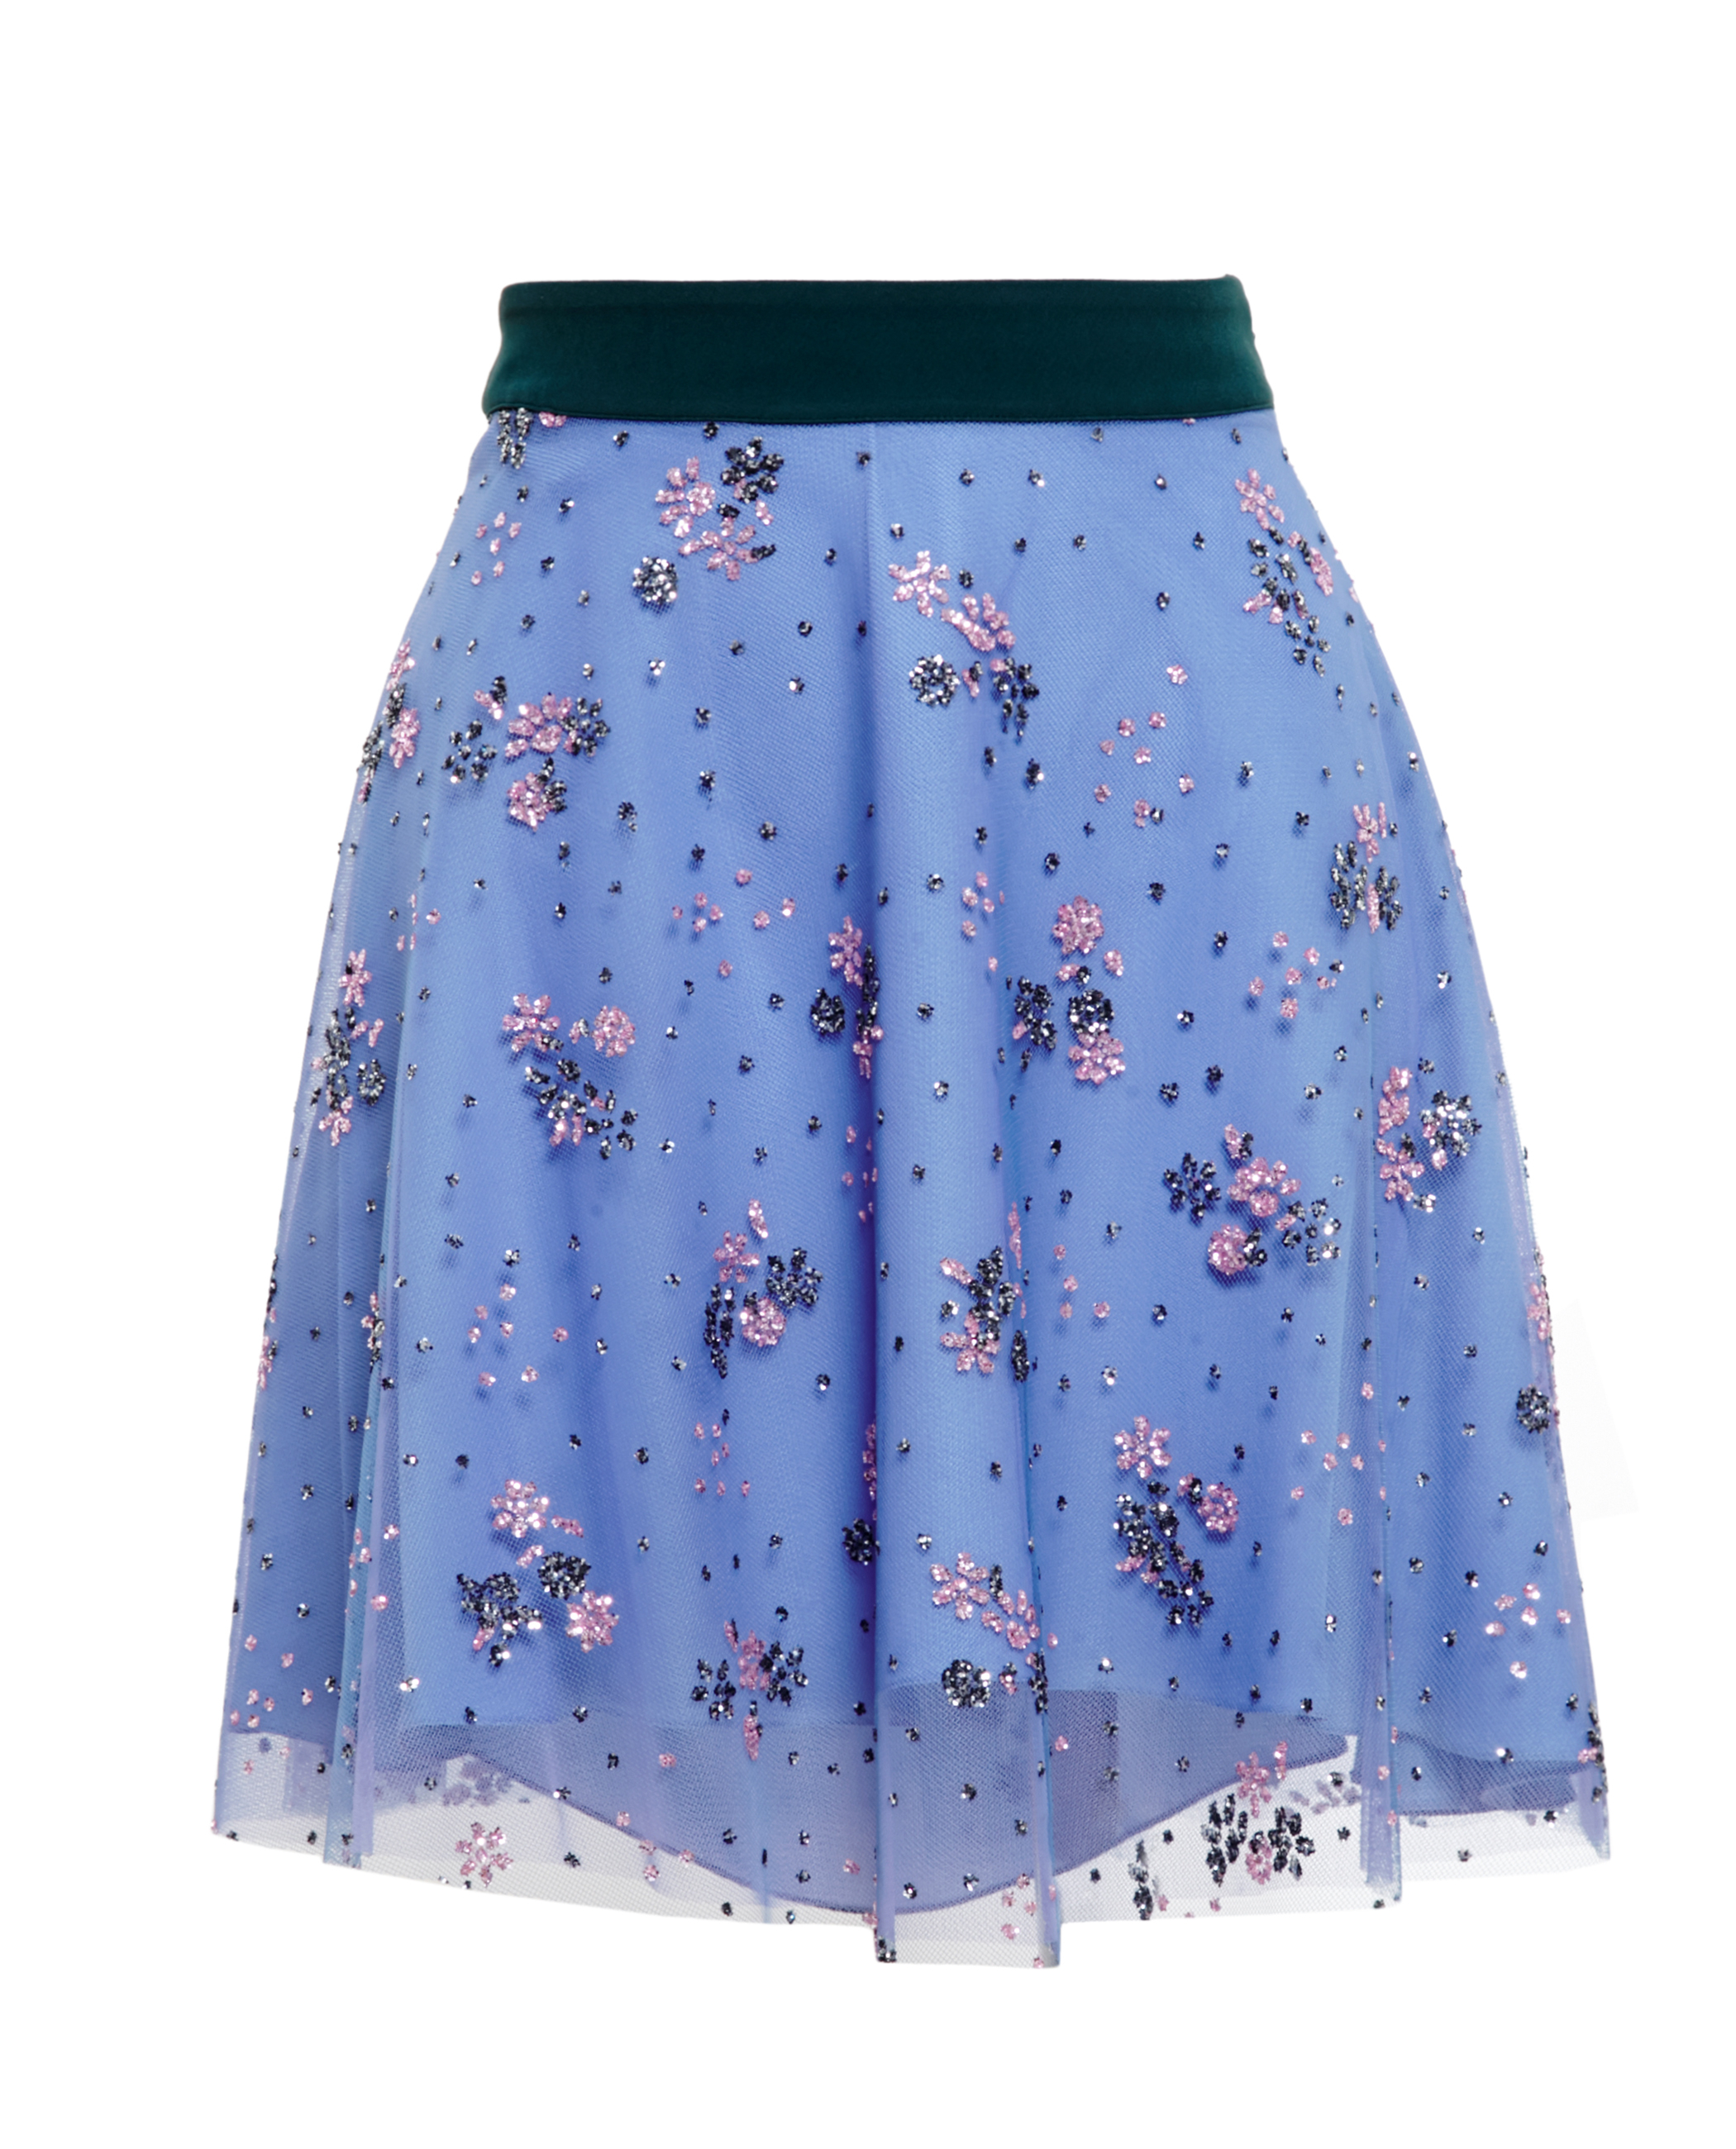 Lyst - Mary Katrantzou 'Glitter Diona' Skirt in Blue